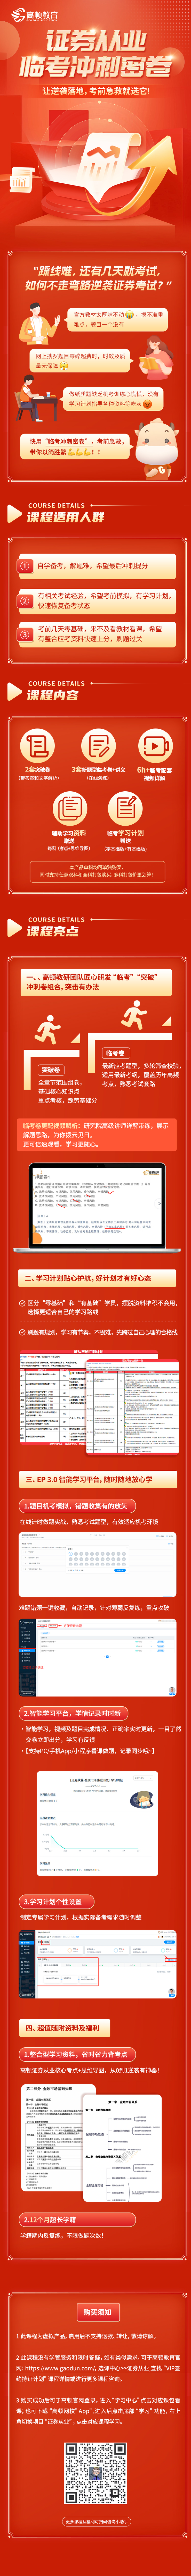 https://simg01.gaodunwangxiao.com/uploadfiles/product-center/202310/31/f6b09_20231031133310.jpg